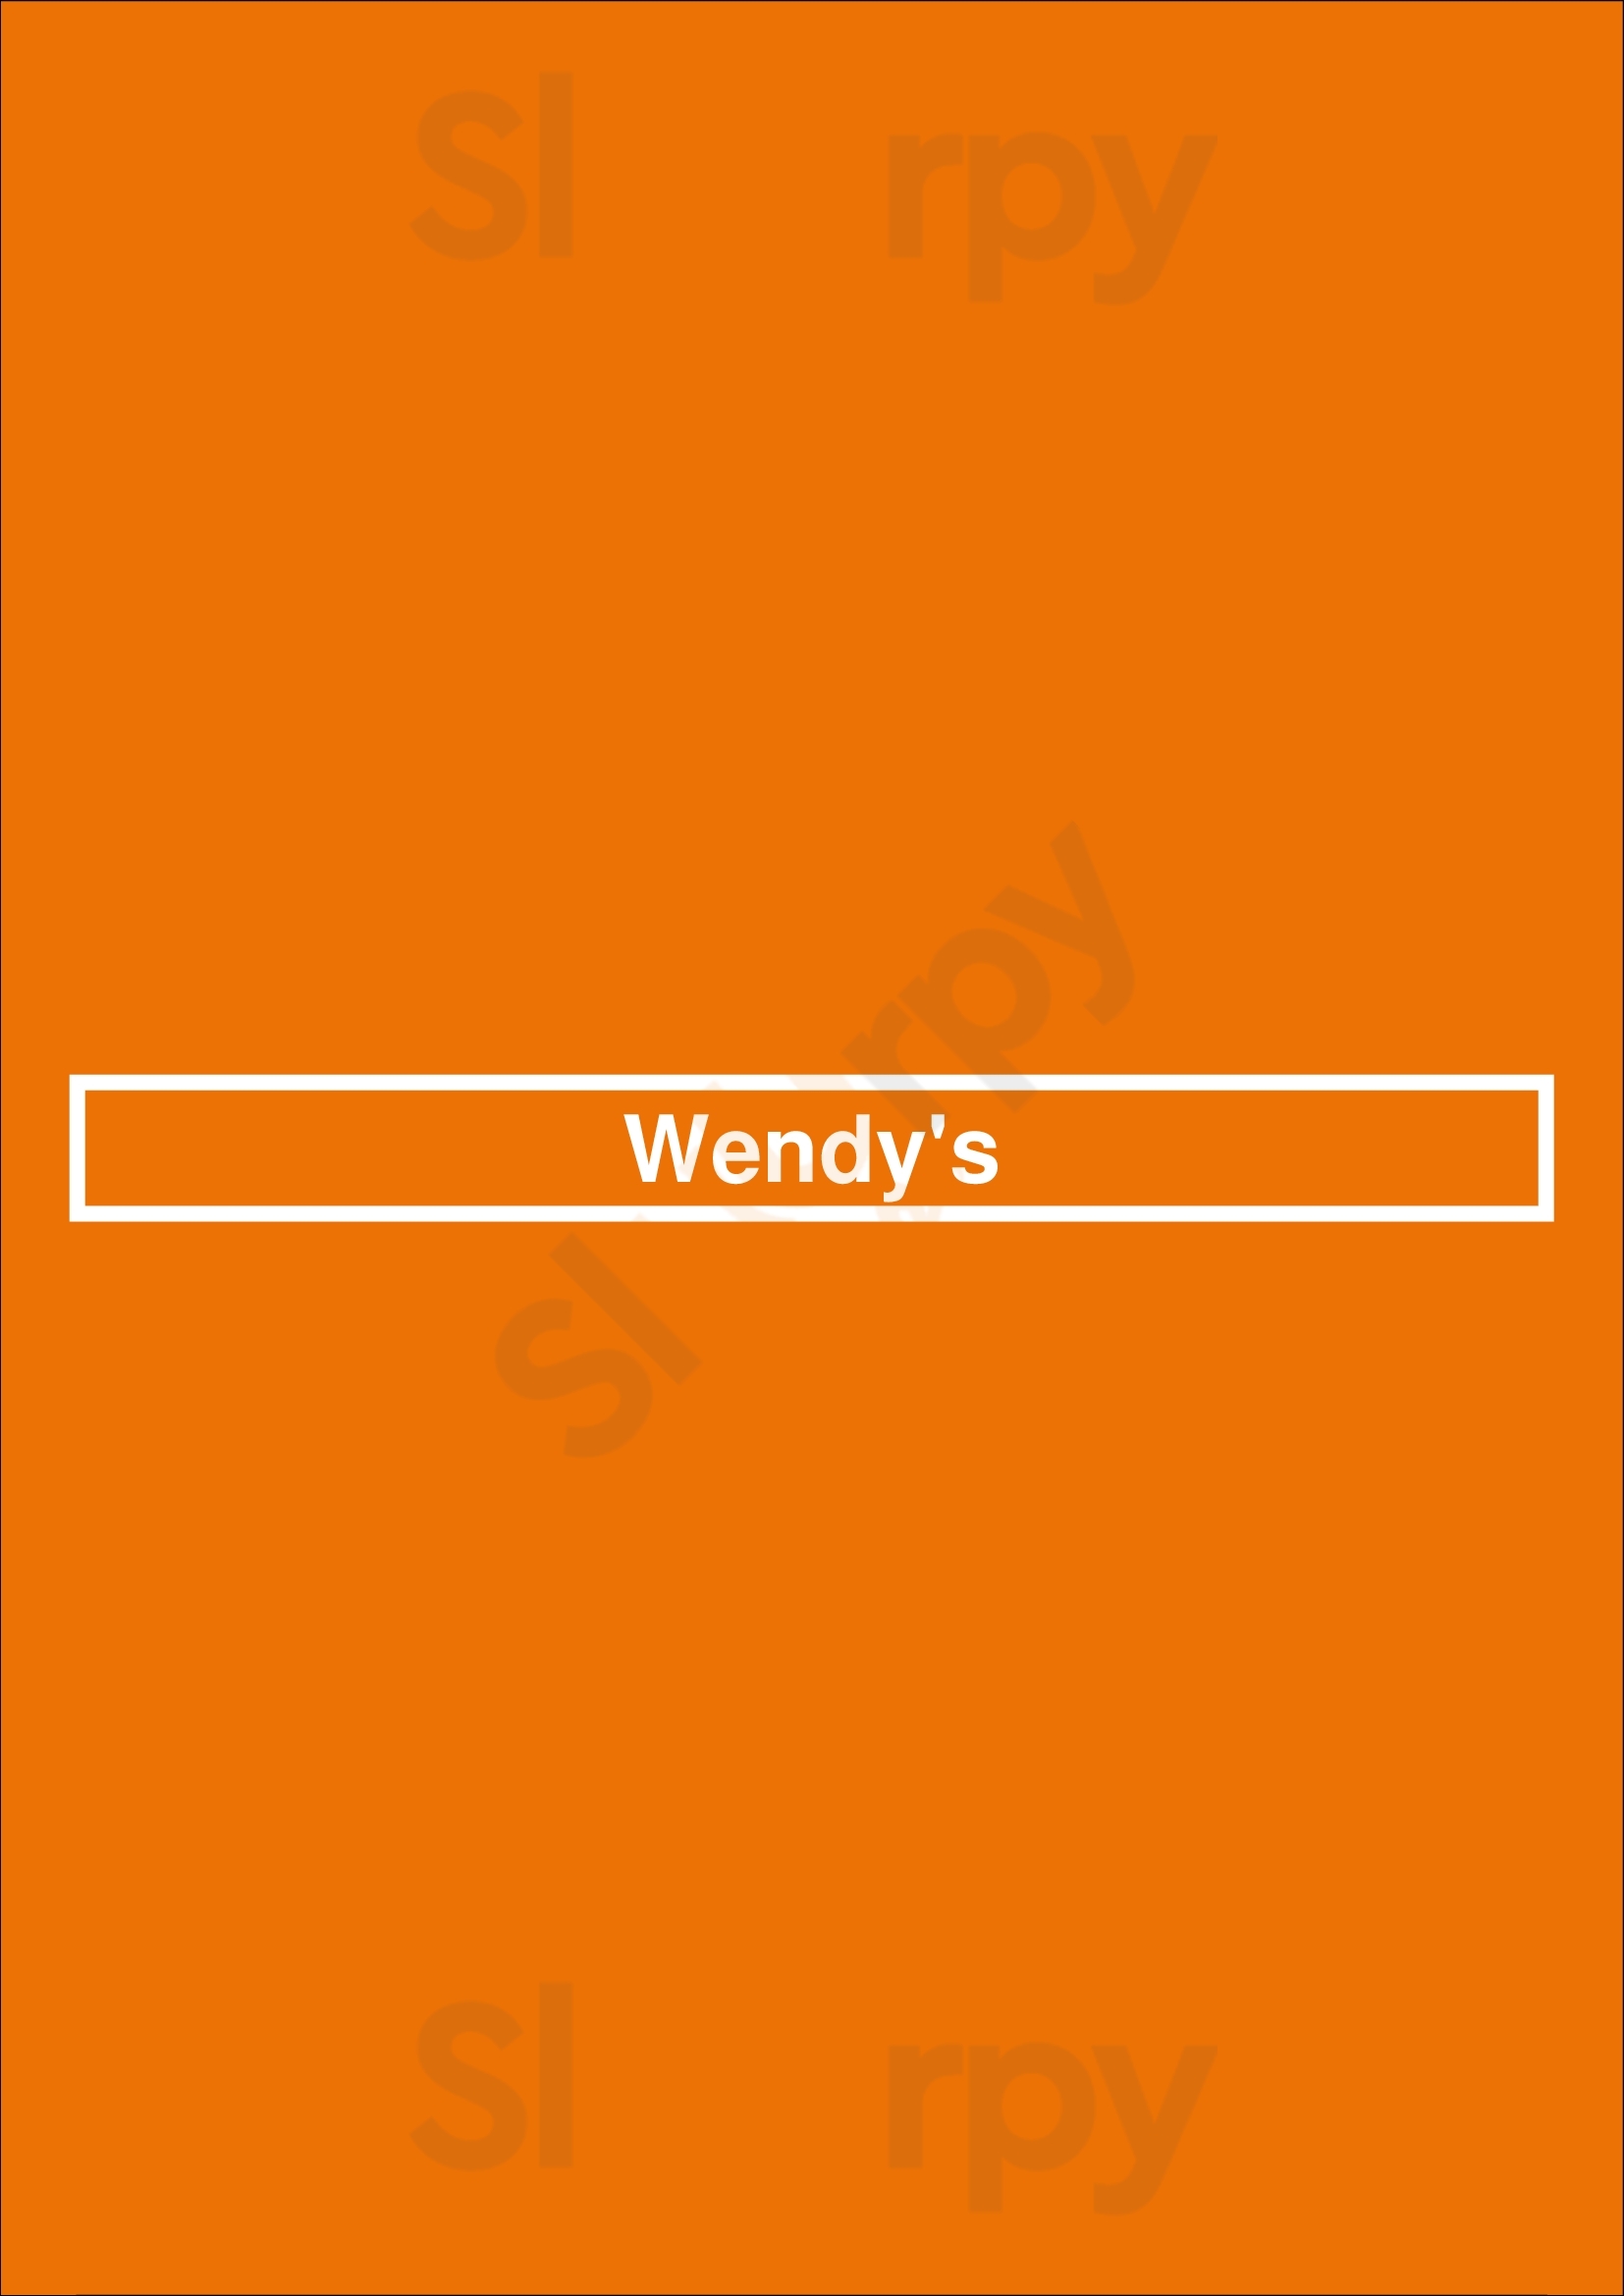 Wendy's Miami Menu - 1